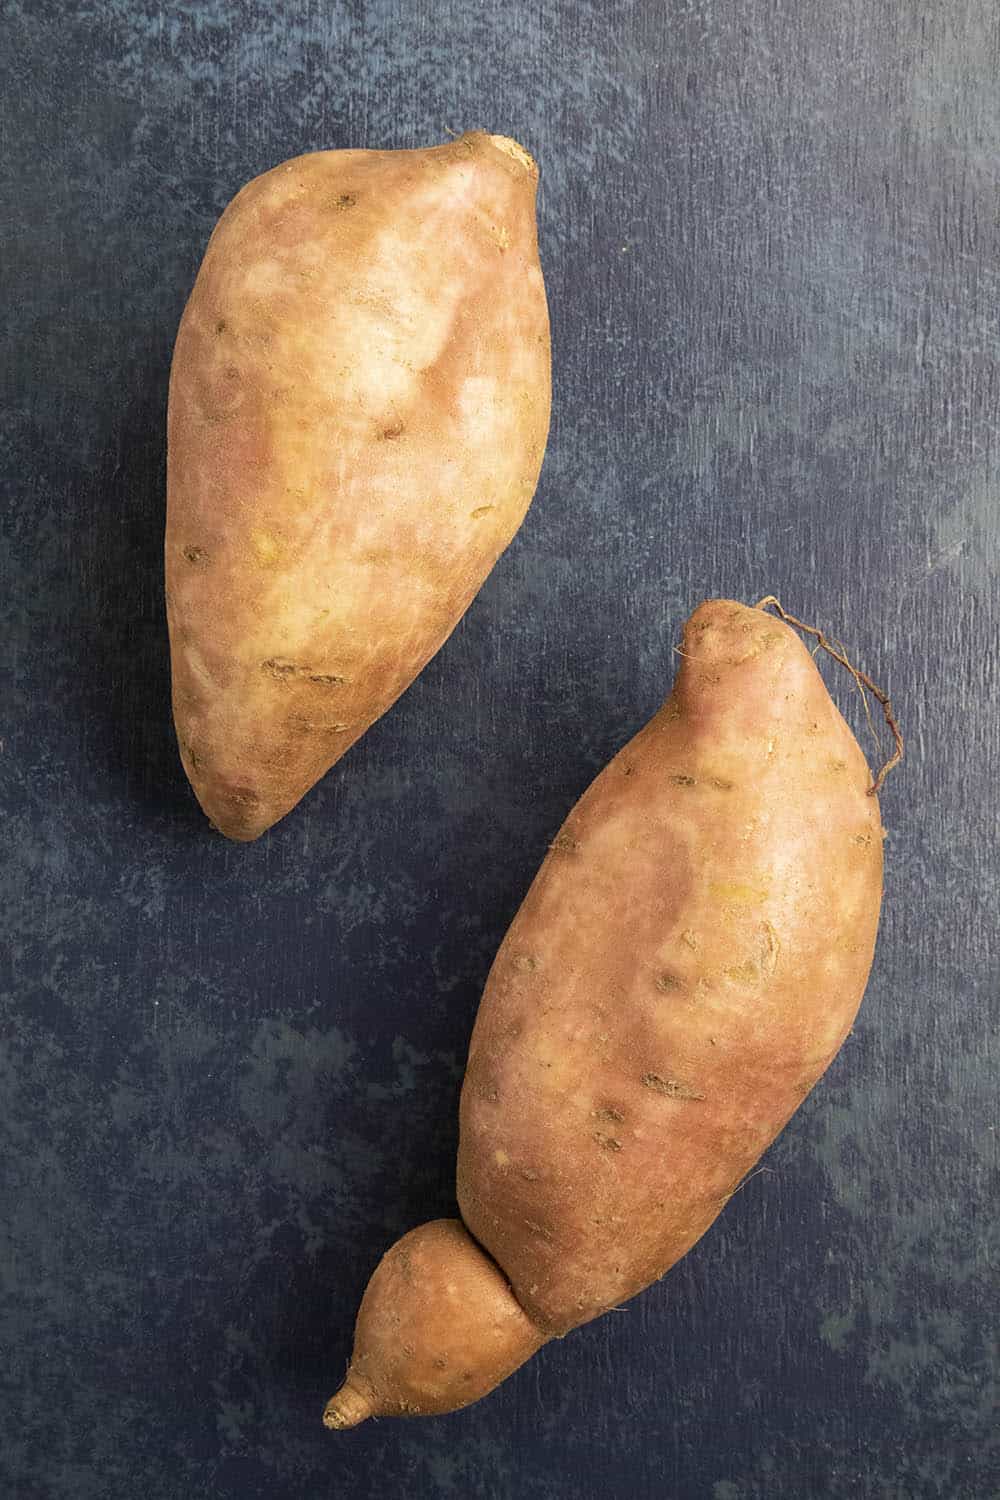 Two large Sweet Potatoes